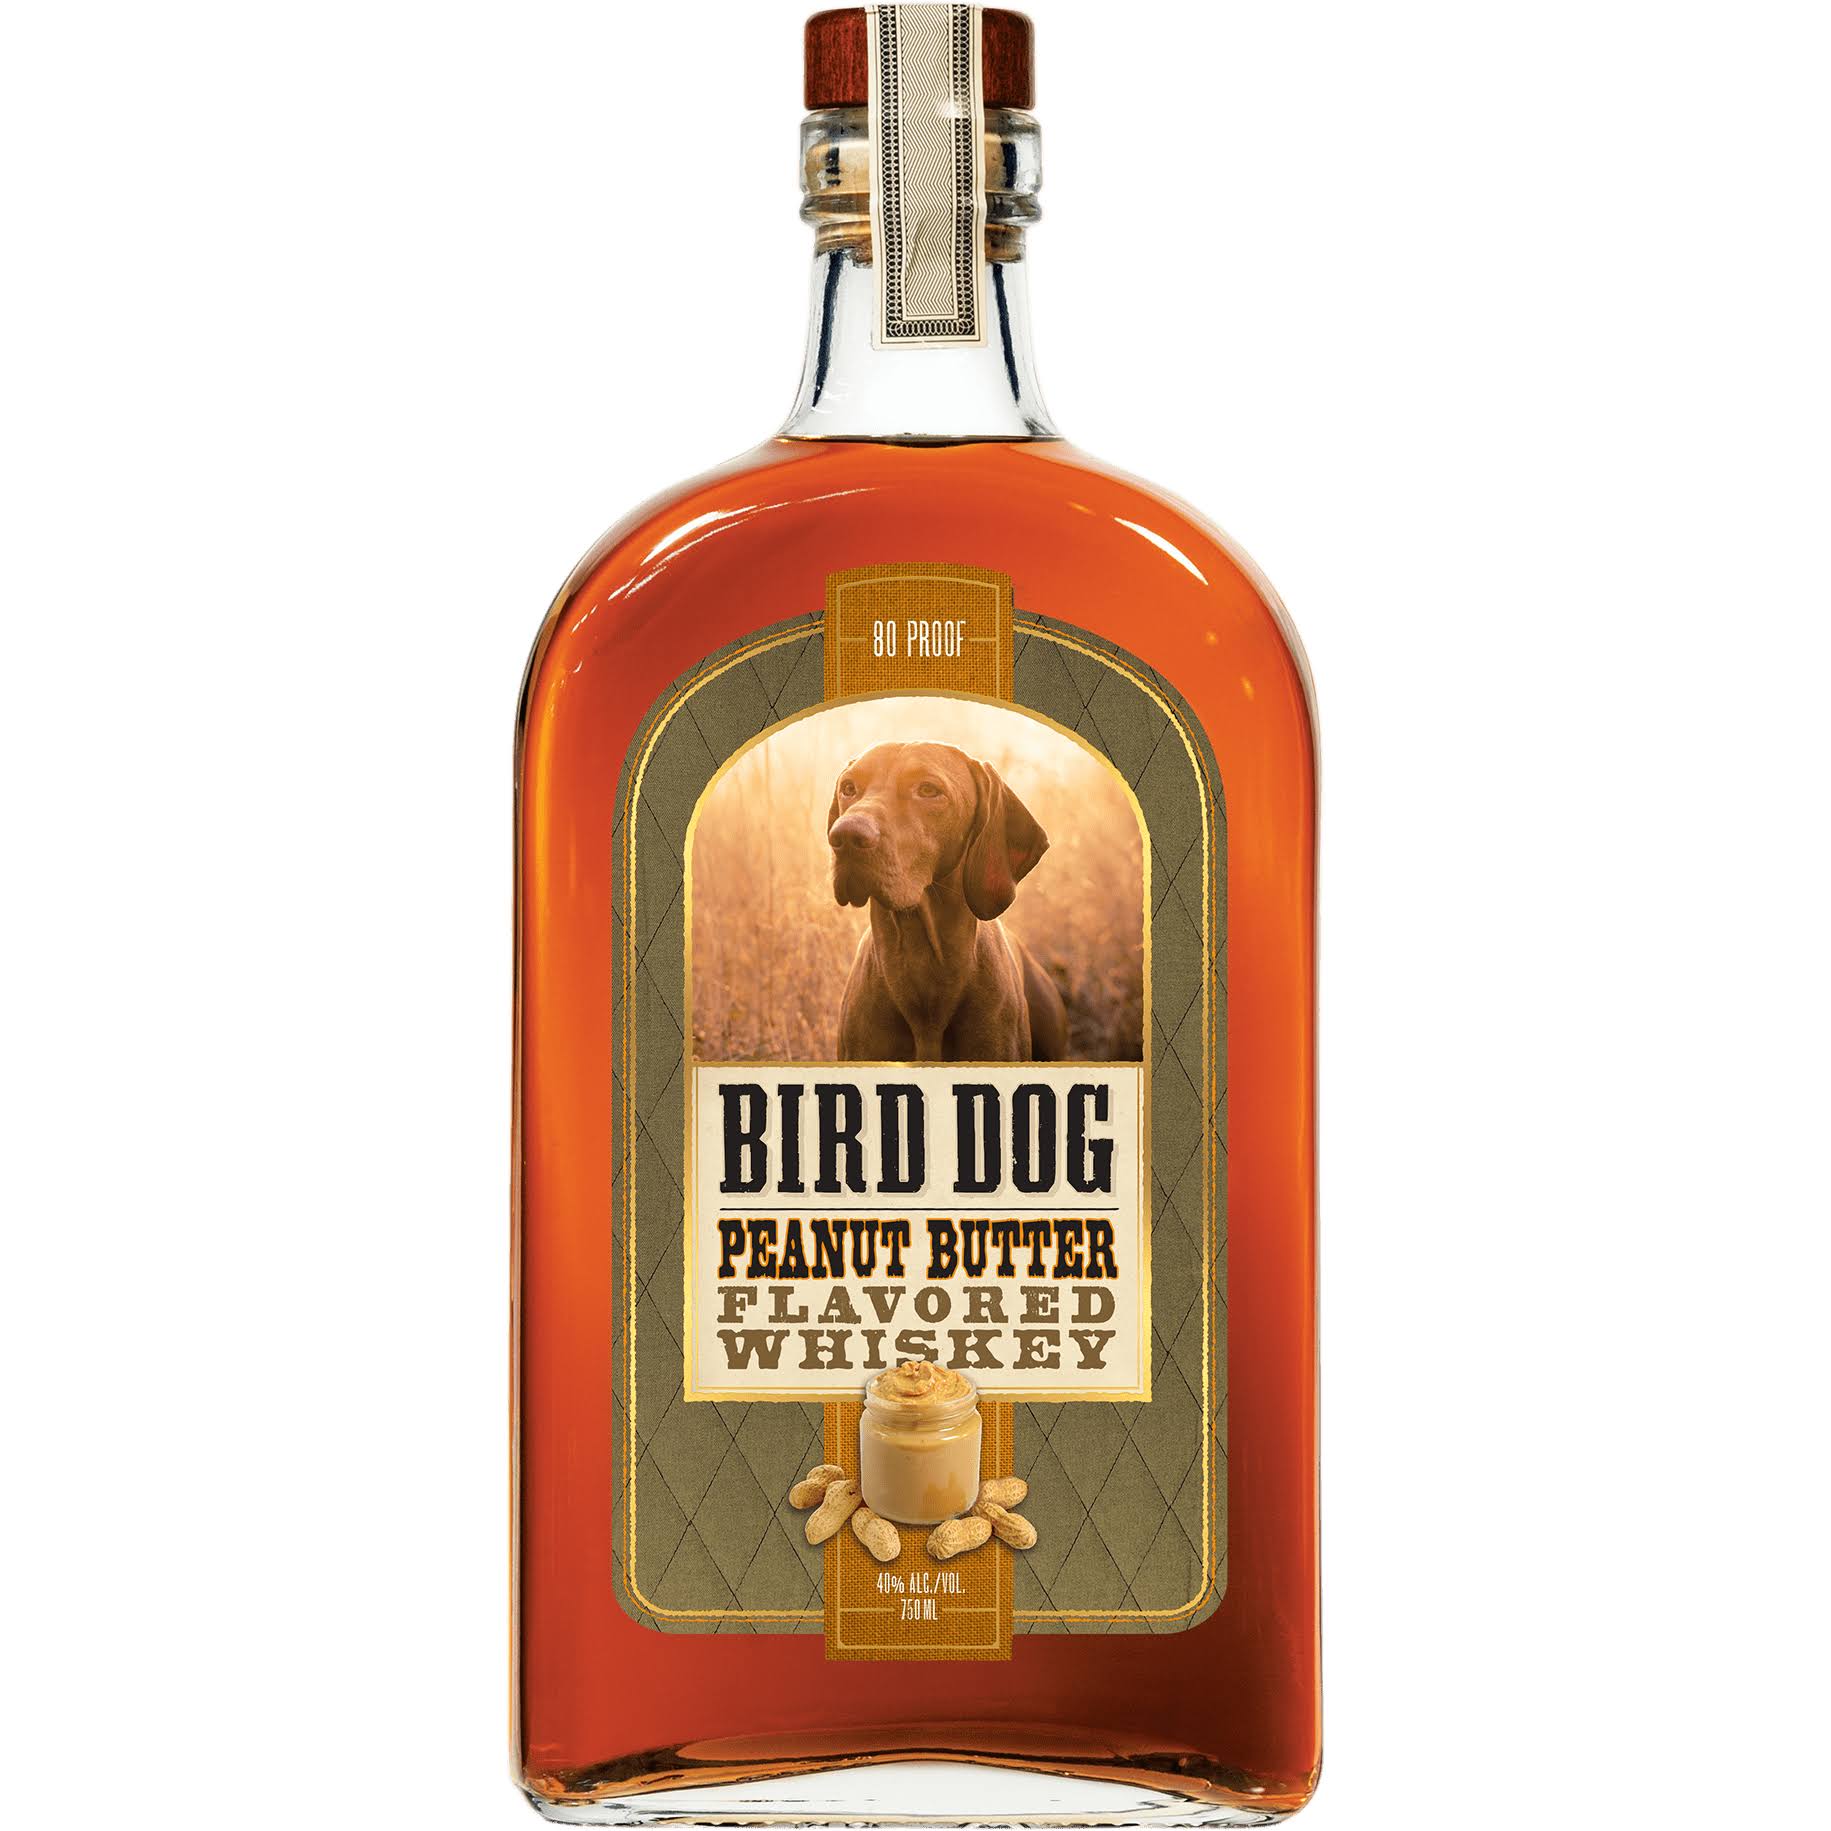 Bird Dog Whiskey, Peanut Butter Flavored - 750 ml